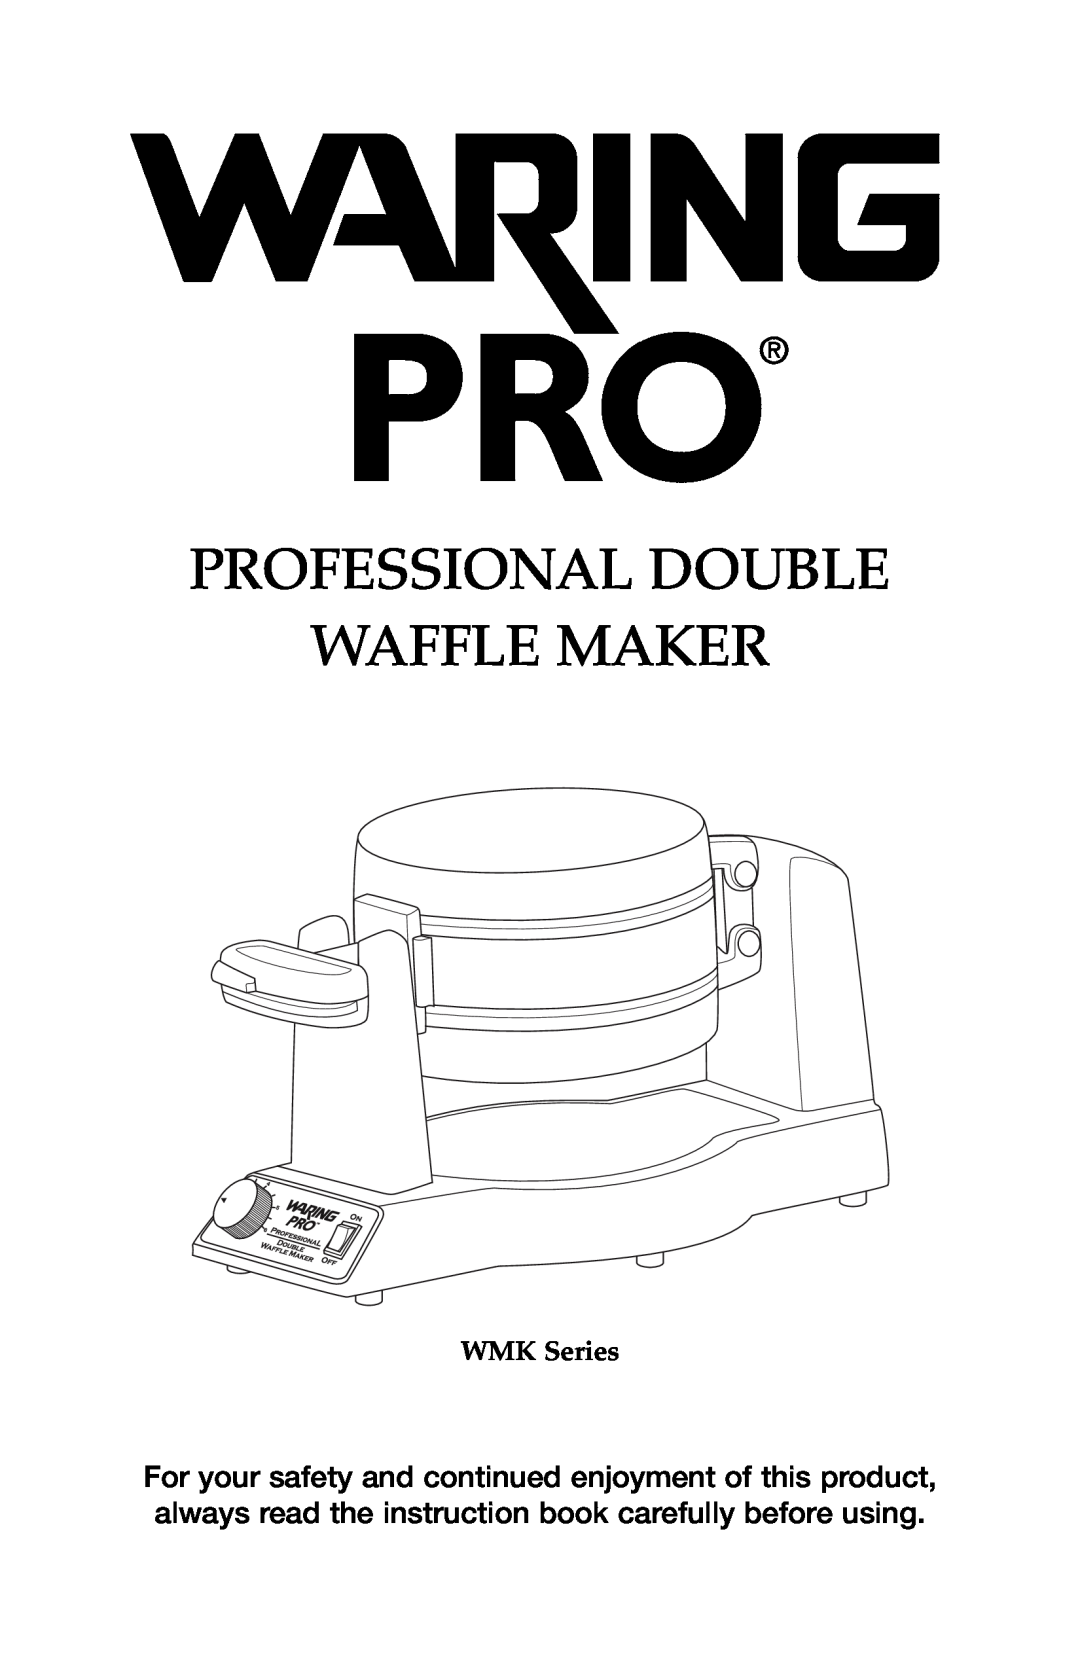 Waring WMK600 manual Professional Double Waffle Maker, WMK Series 